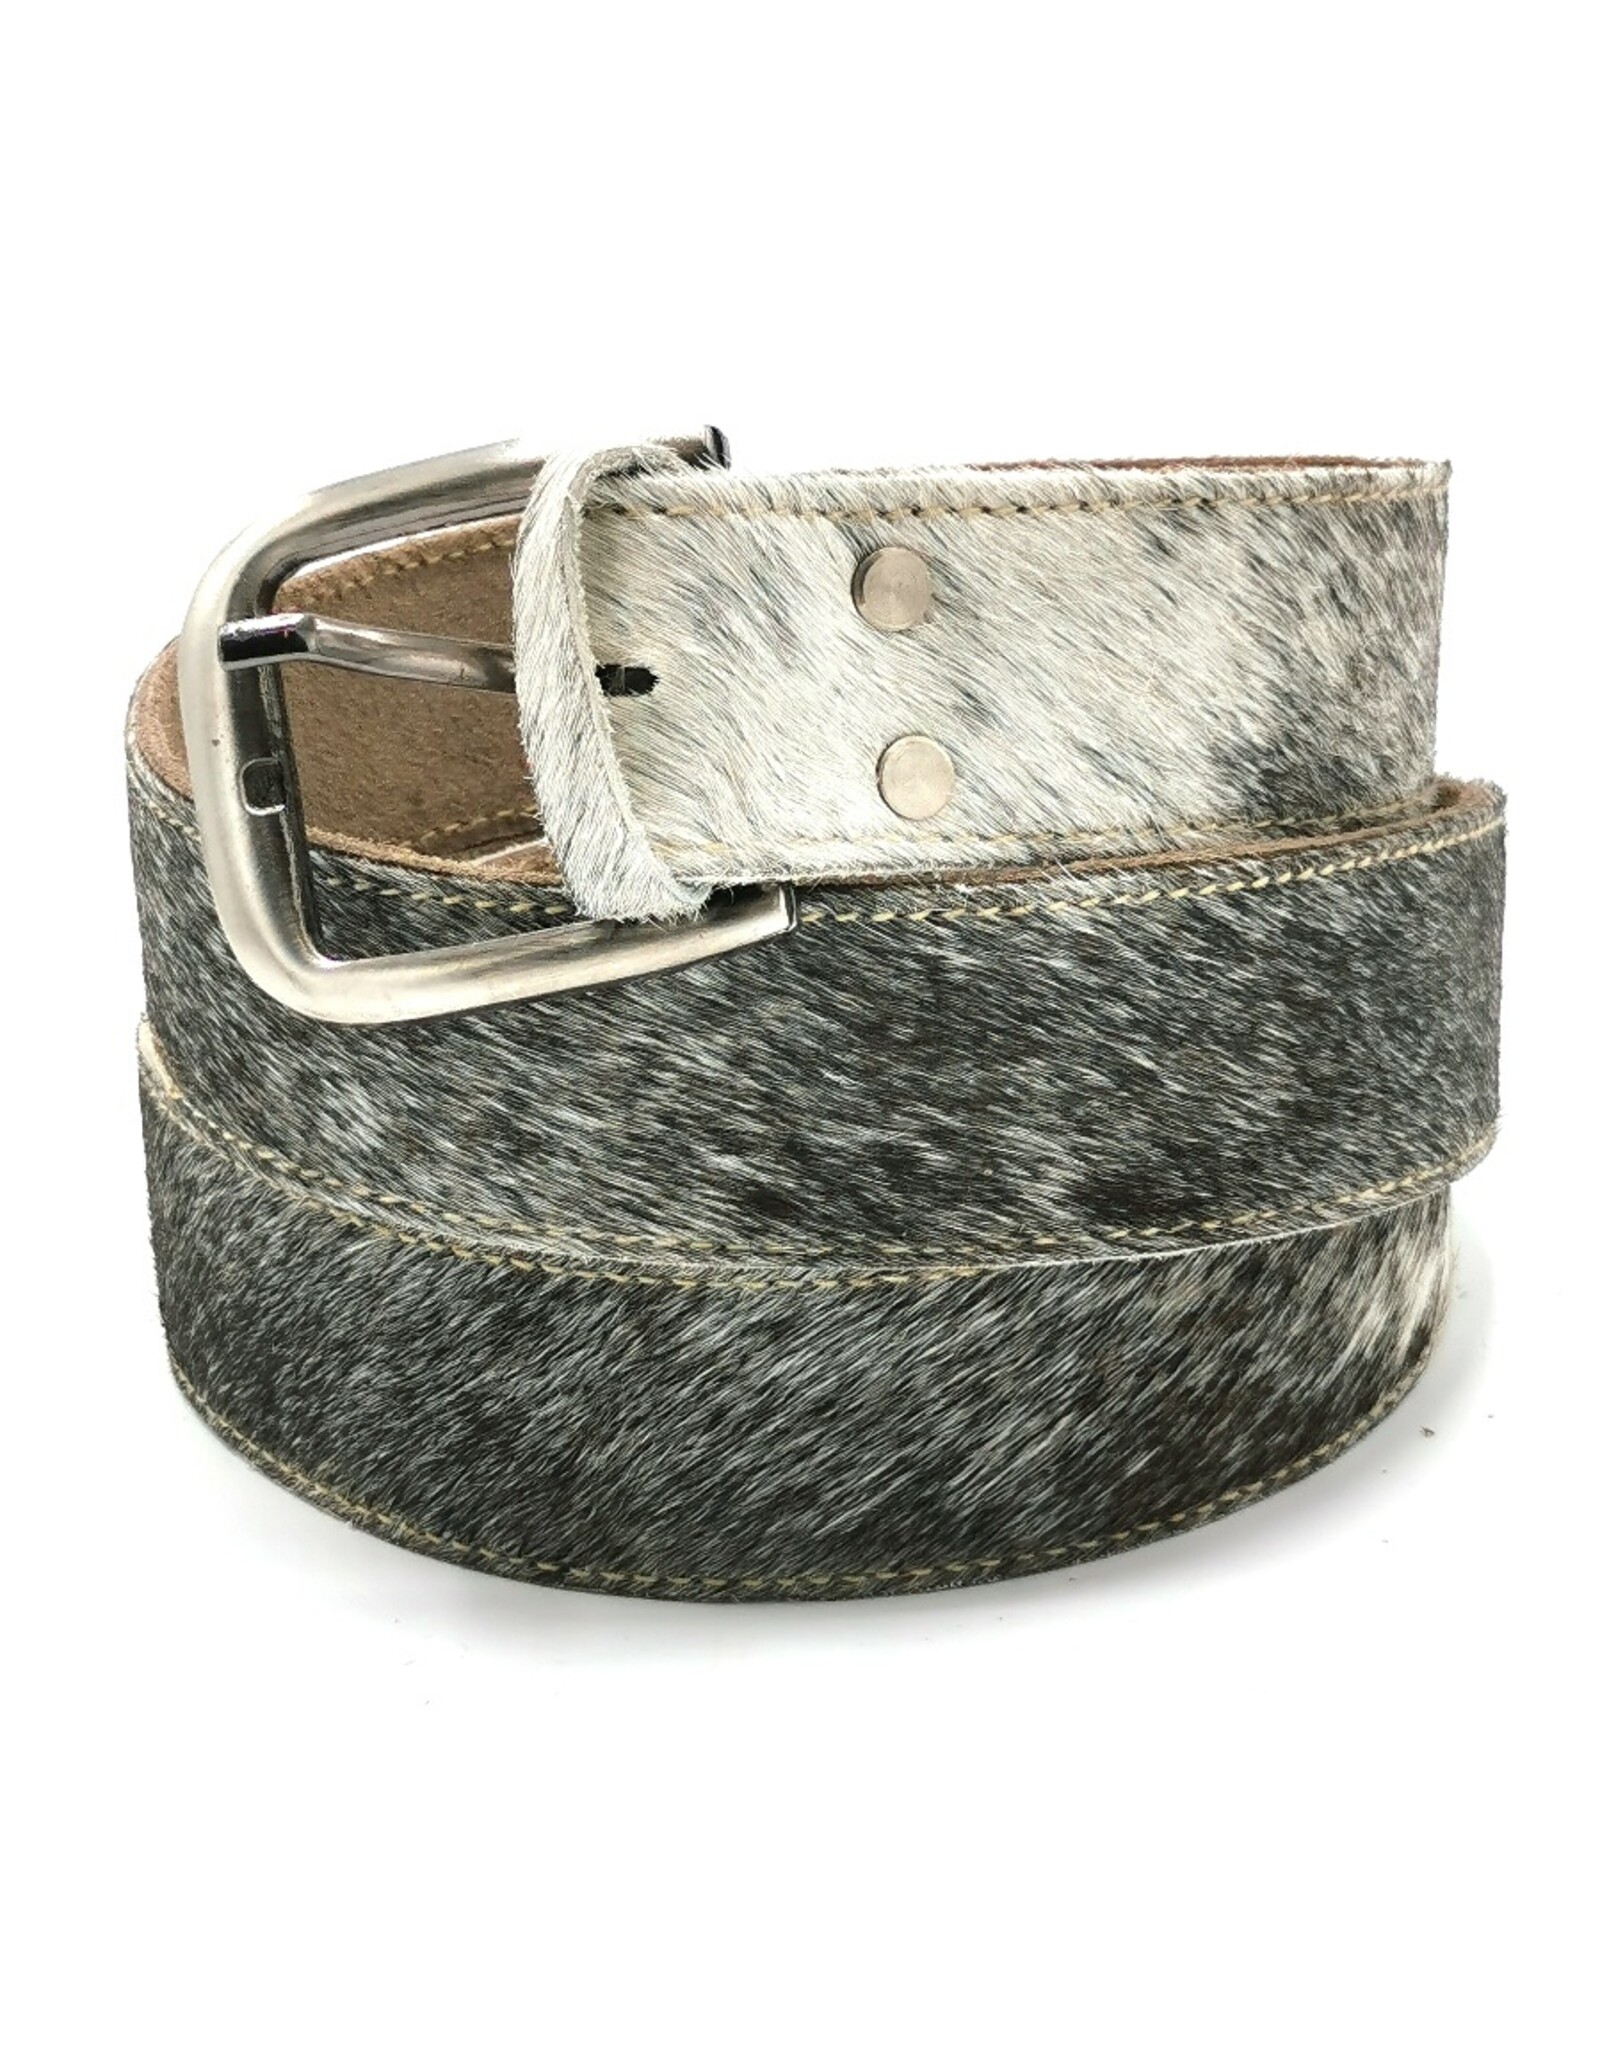 Trukado Leather belts and buckles - Cowhide Belt grey